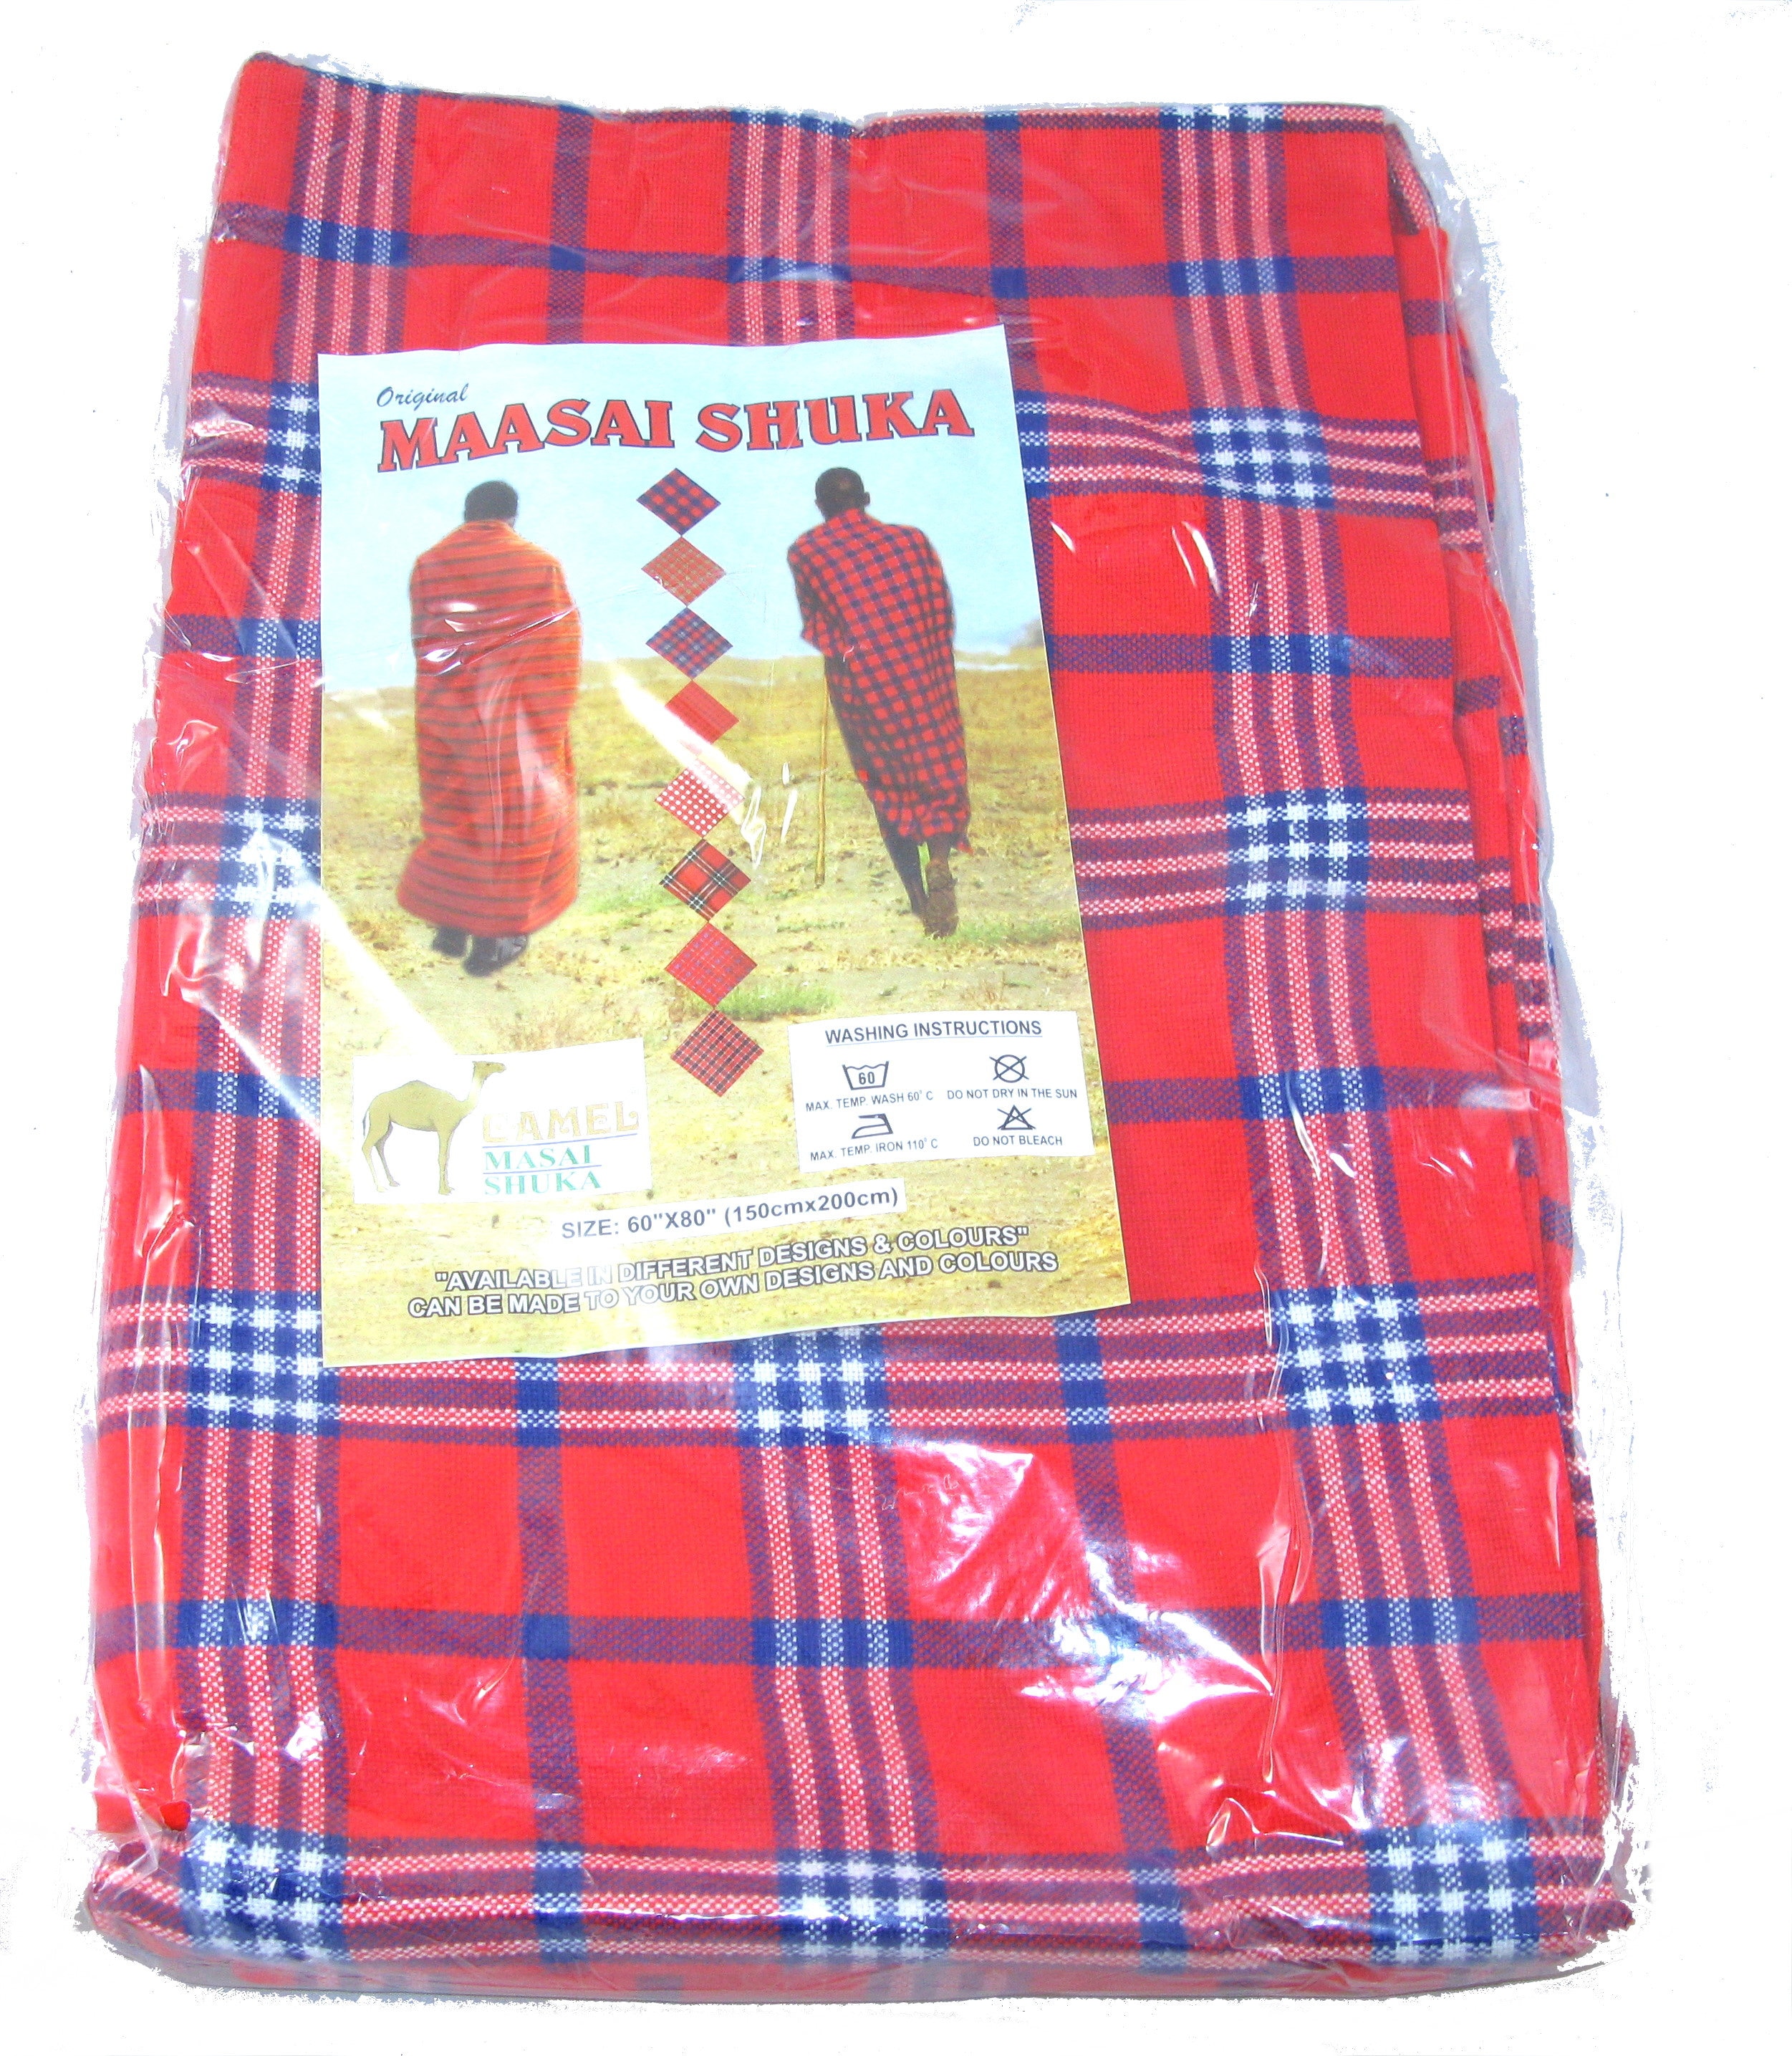  JACKIELYNA'S TWO (2) Original Kenya Maasai/Masai Multi-colored  Shuka blanket- Masai/Maasai shuka (blanket) - Red+White+Black : Home &  Kitchen